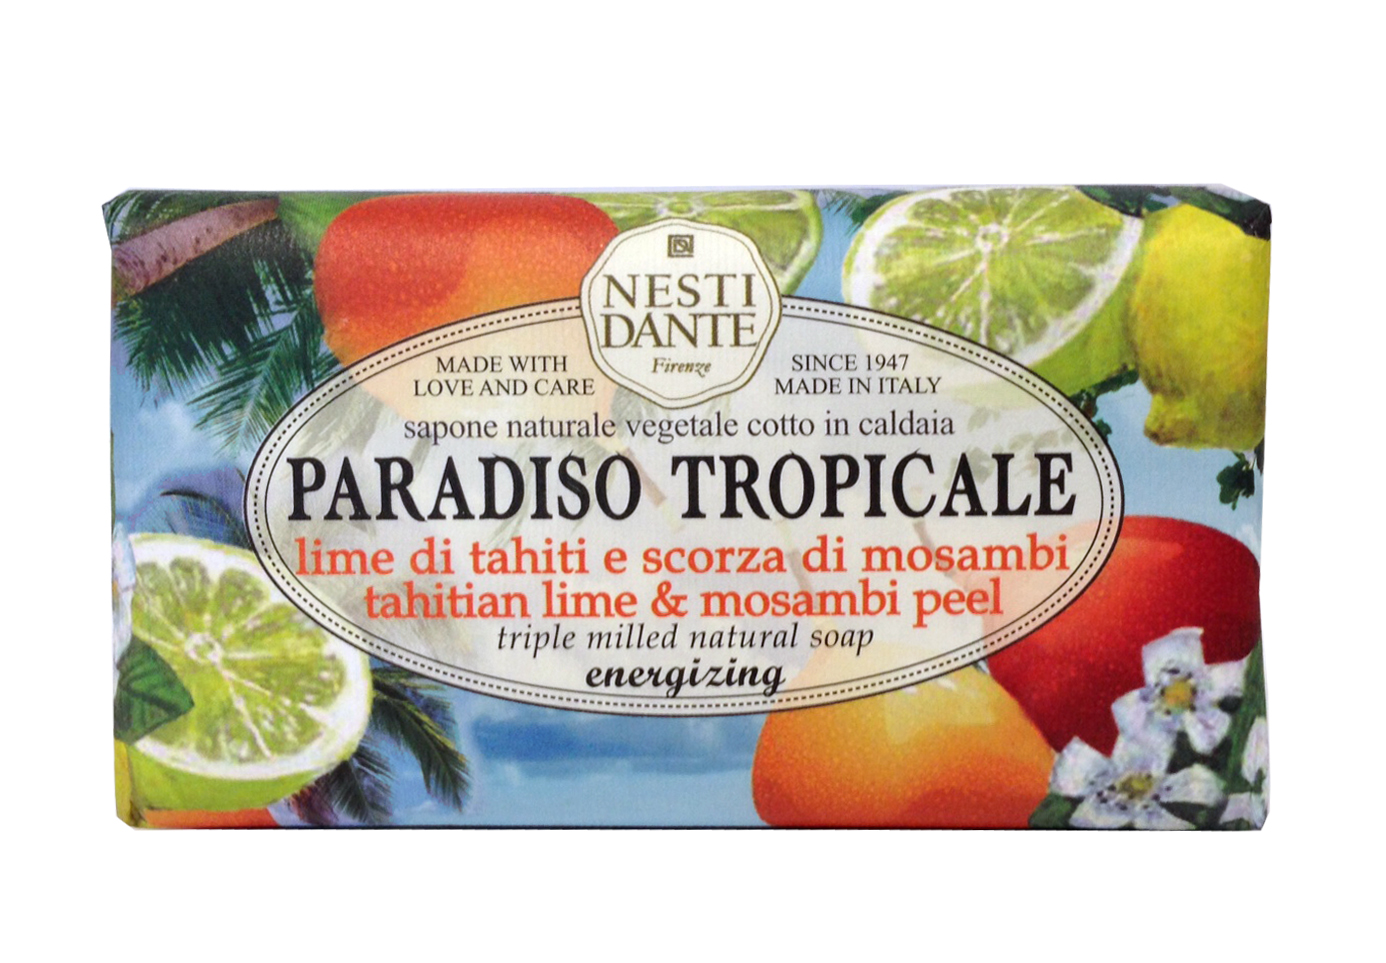 Nesti Dante Paradiso Tropicale energizing, 250 gram, 1 stk.